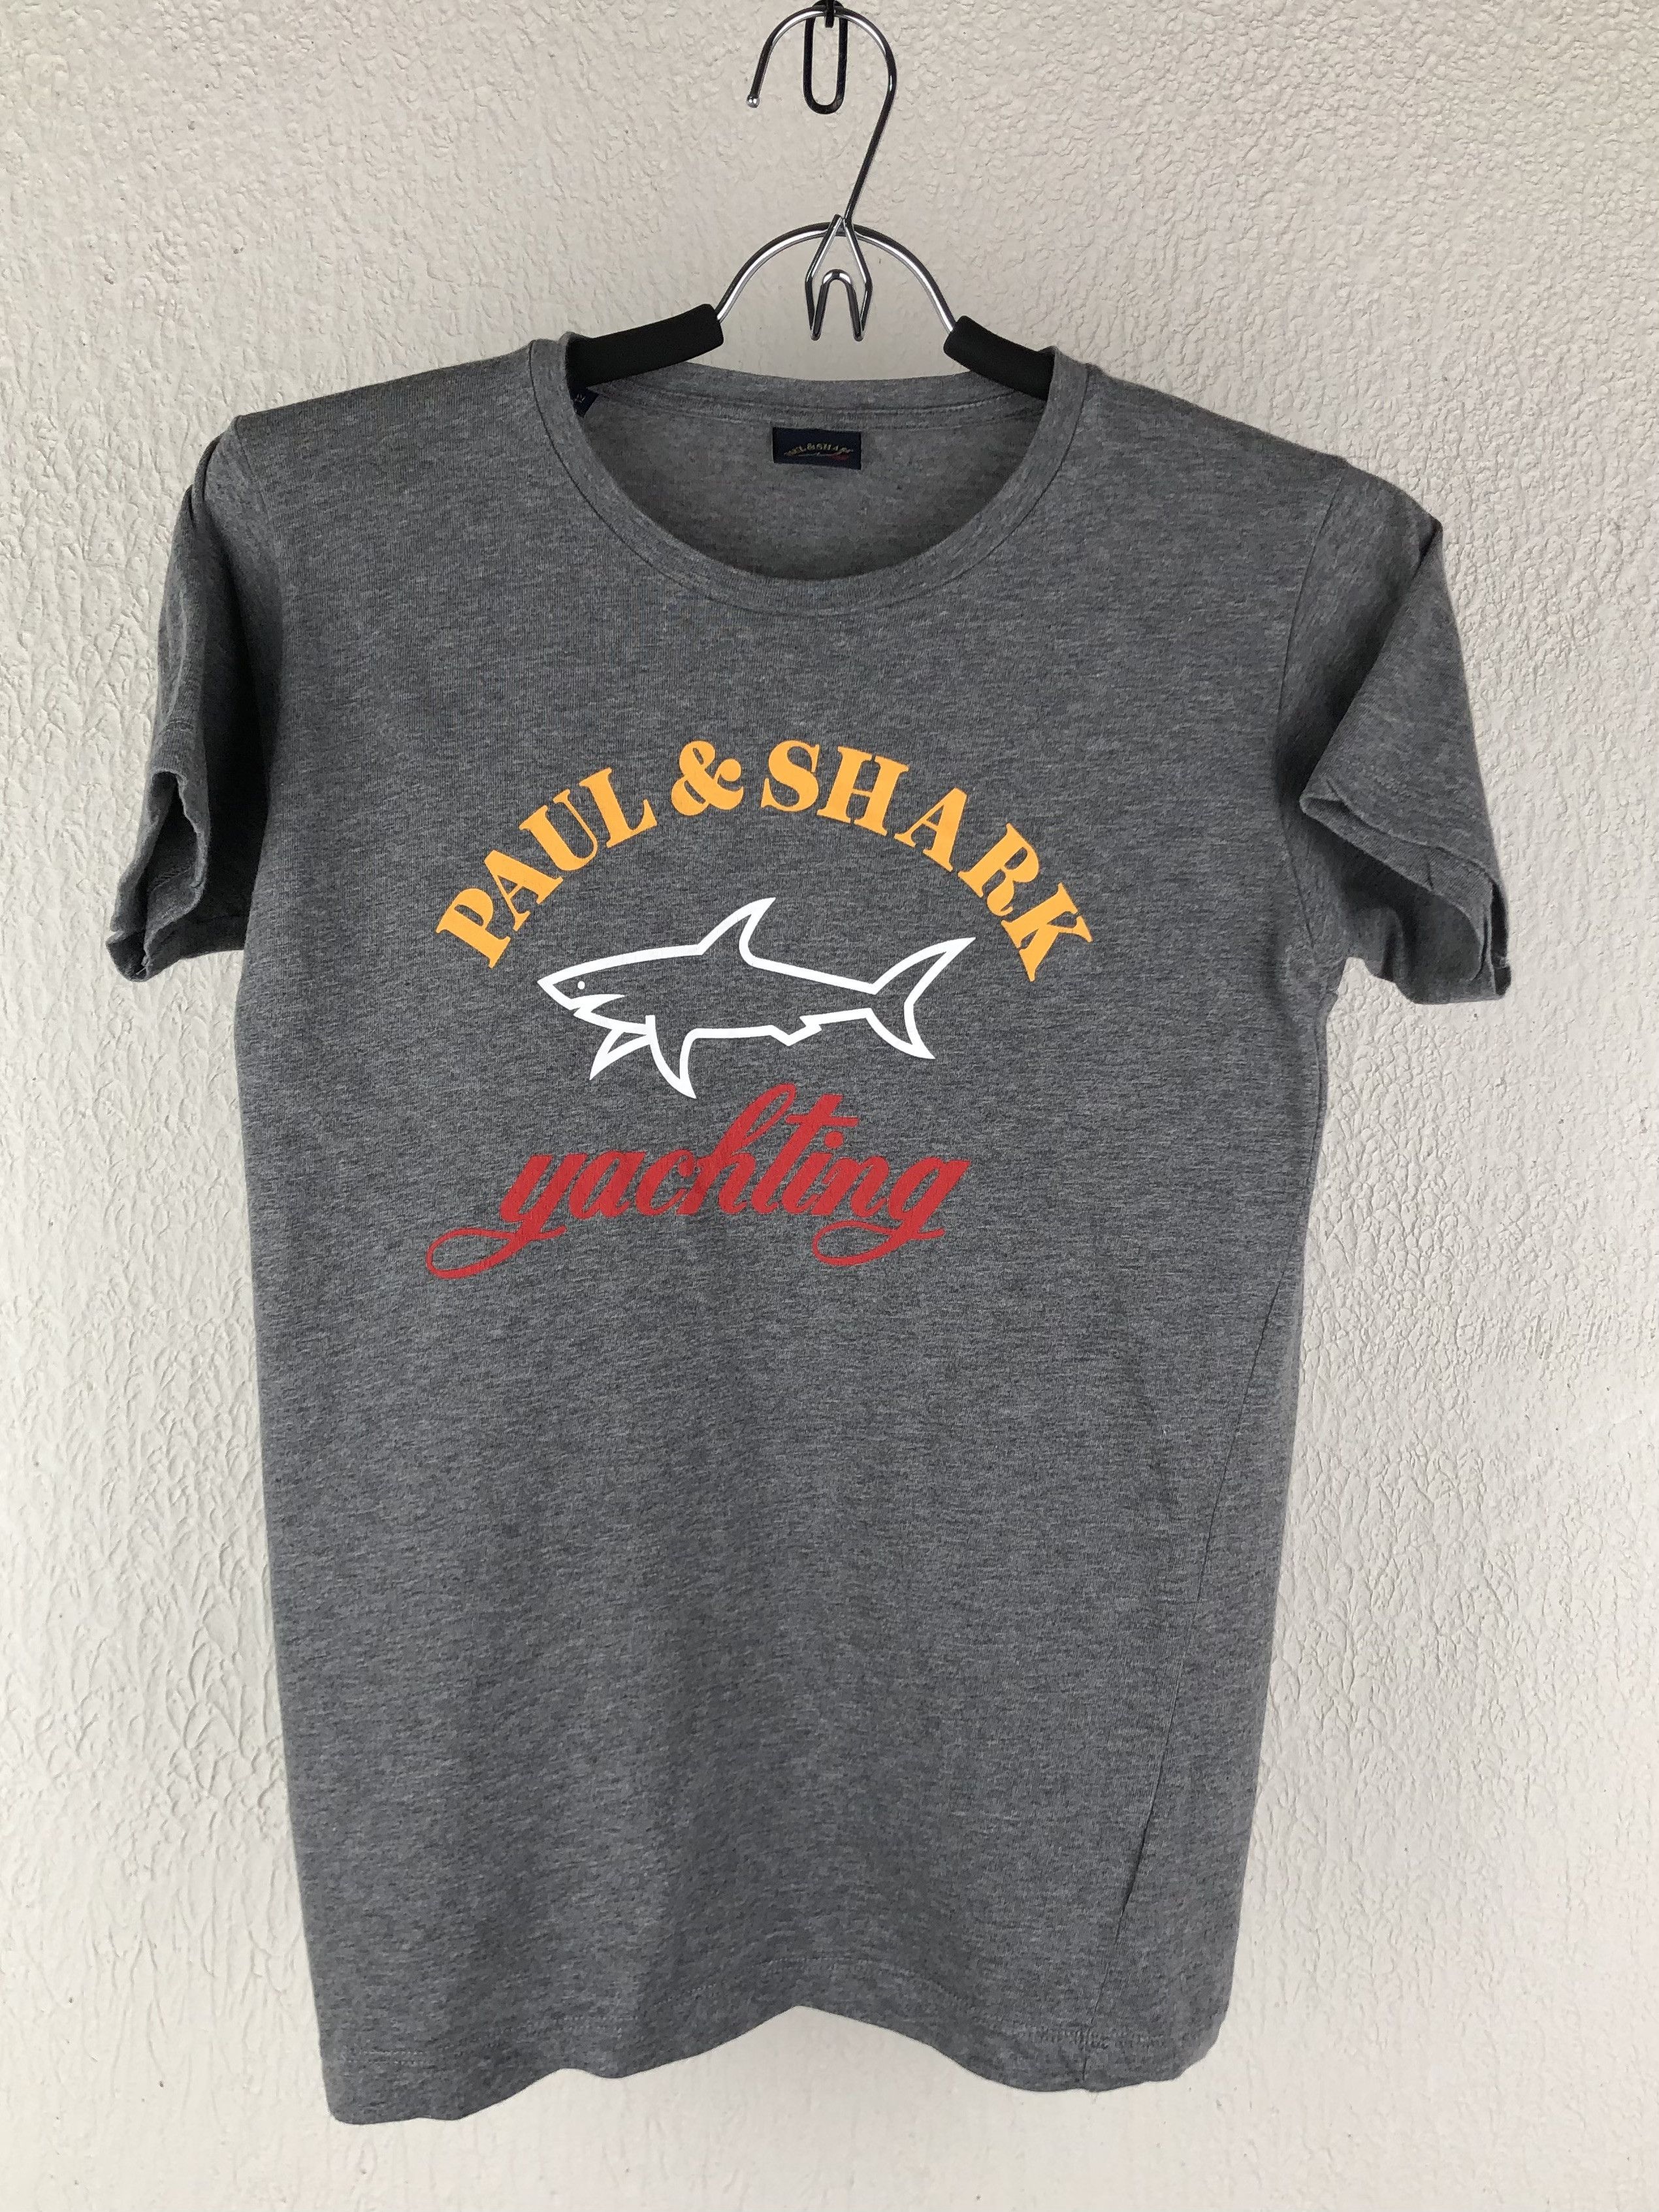 Vintage Paul&Shark Vintage T-Shirt | Grailed